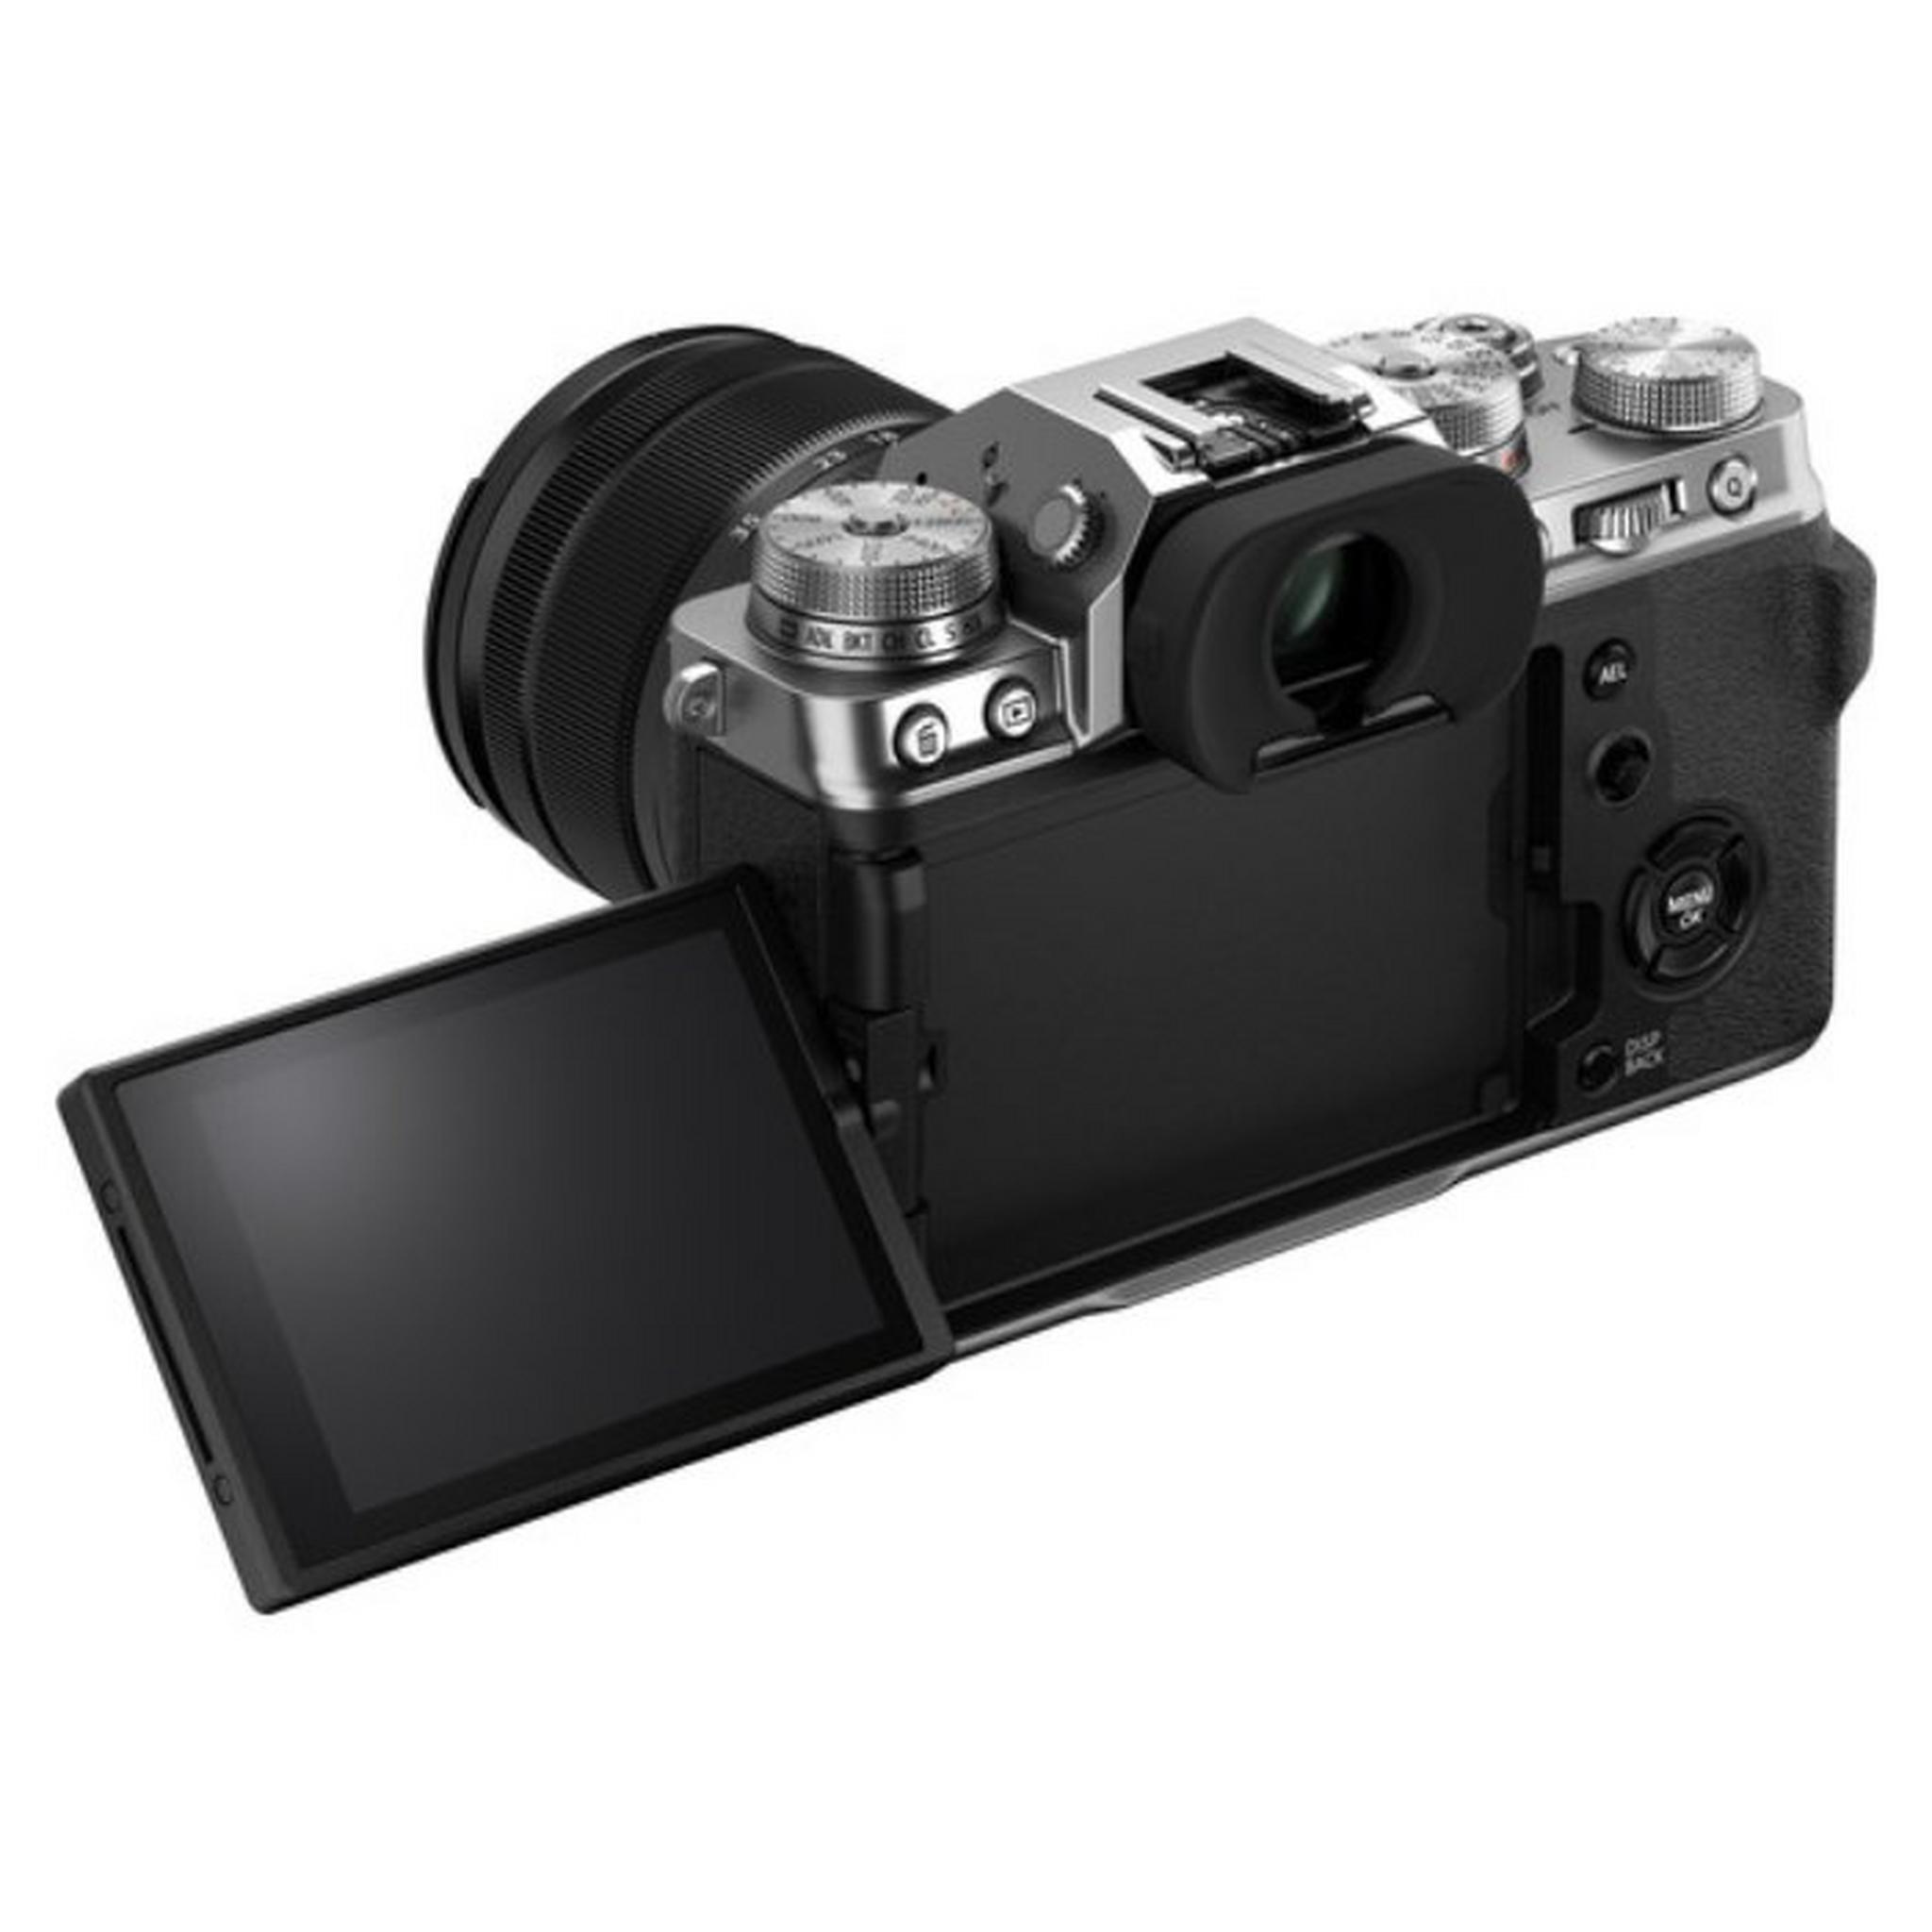 Fujifilm X-T4 Mirrorless Digital Camera with 18-55mm Lens - Silver